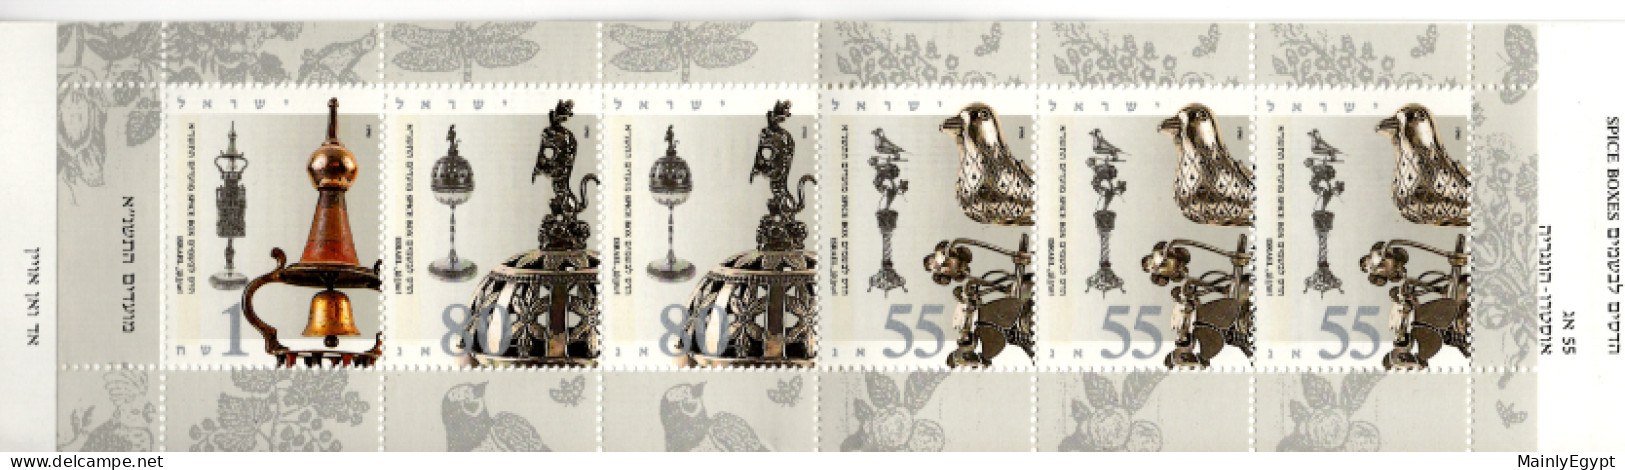 ISRAEL:  Stamp Booklet 1990 Jewish Feasts MNH #F036 - Markenheftchen